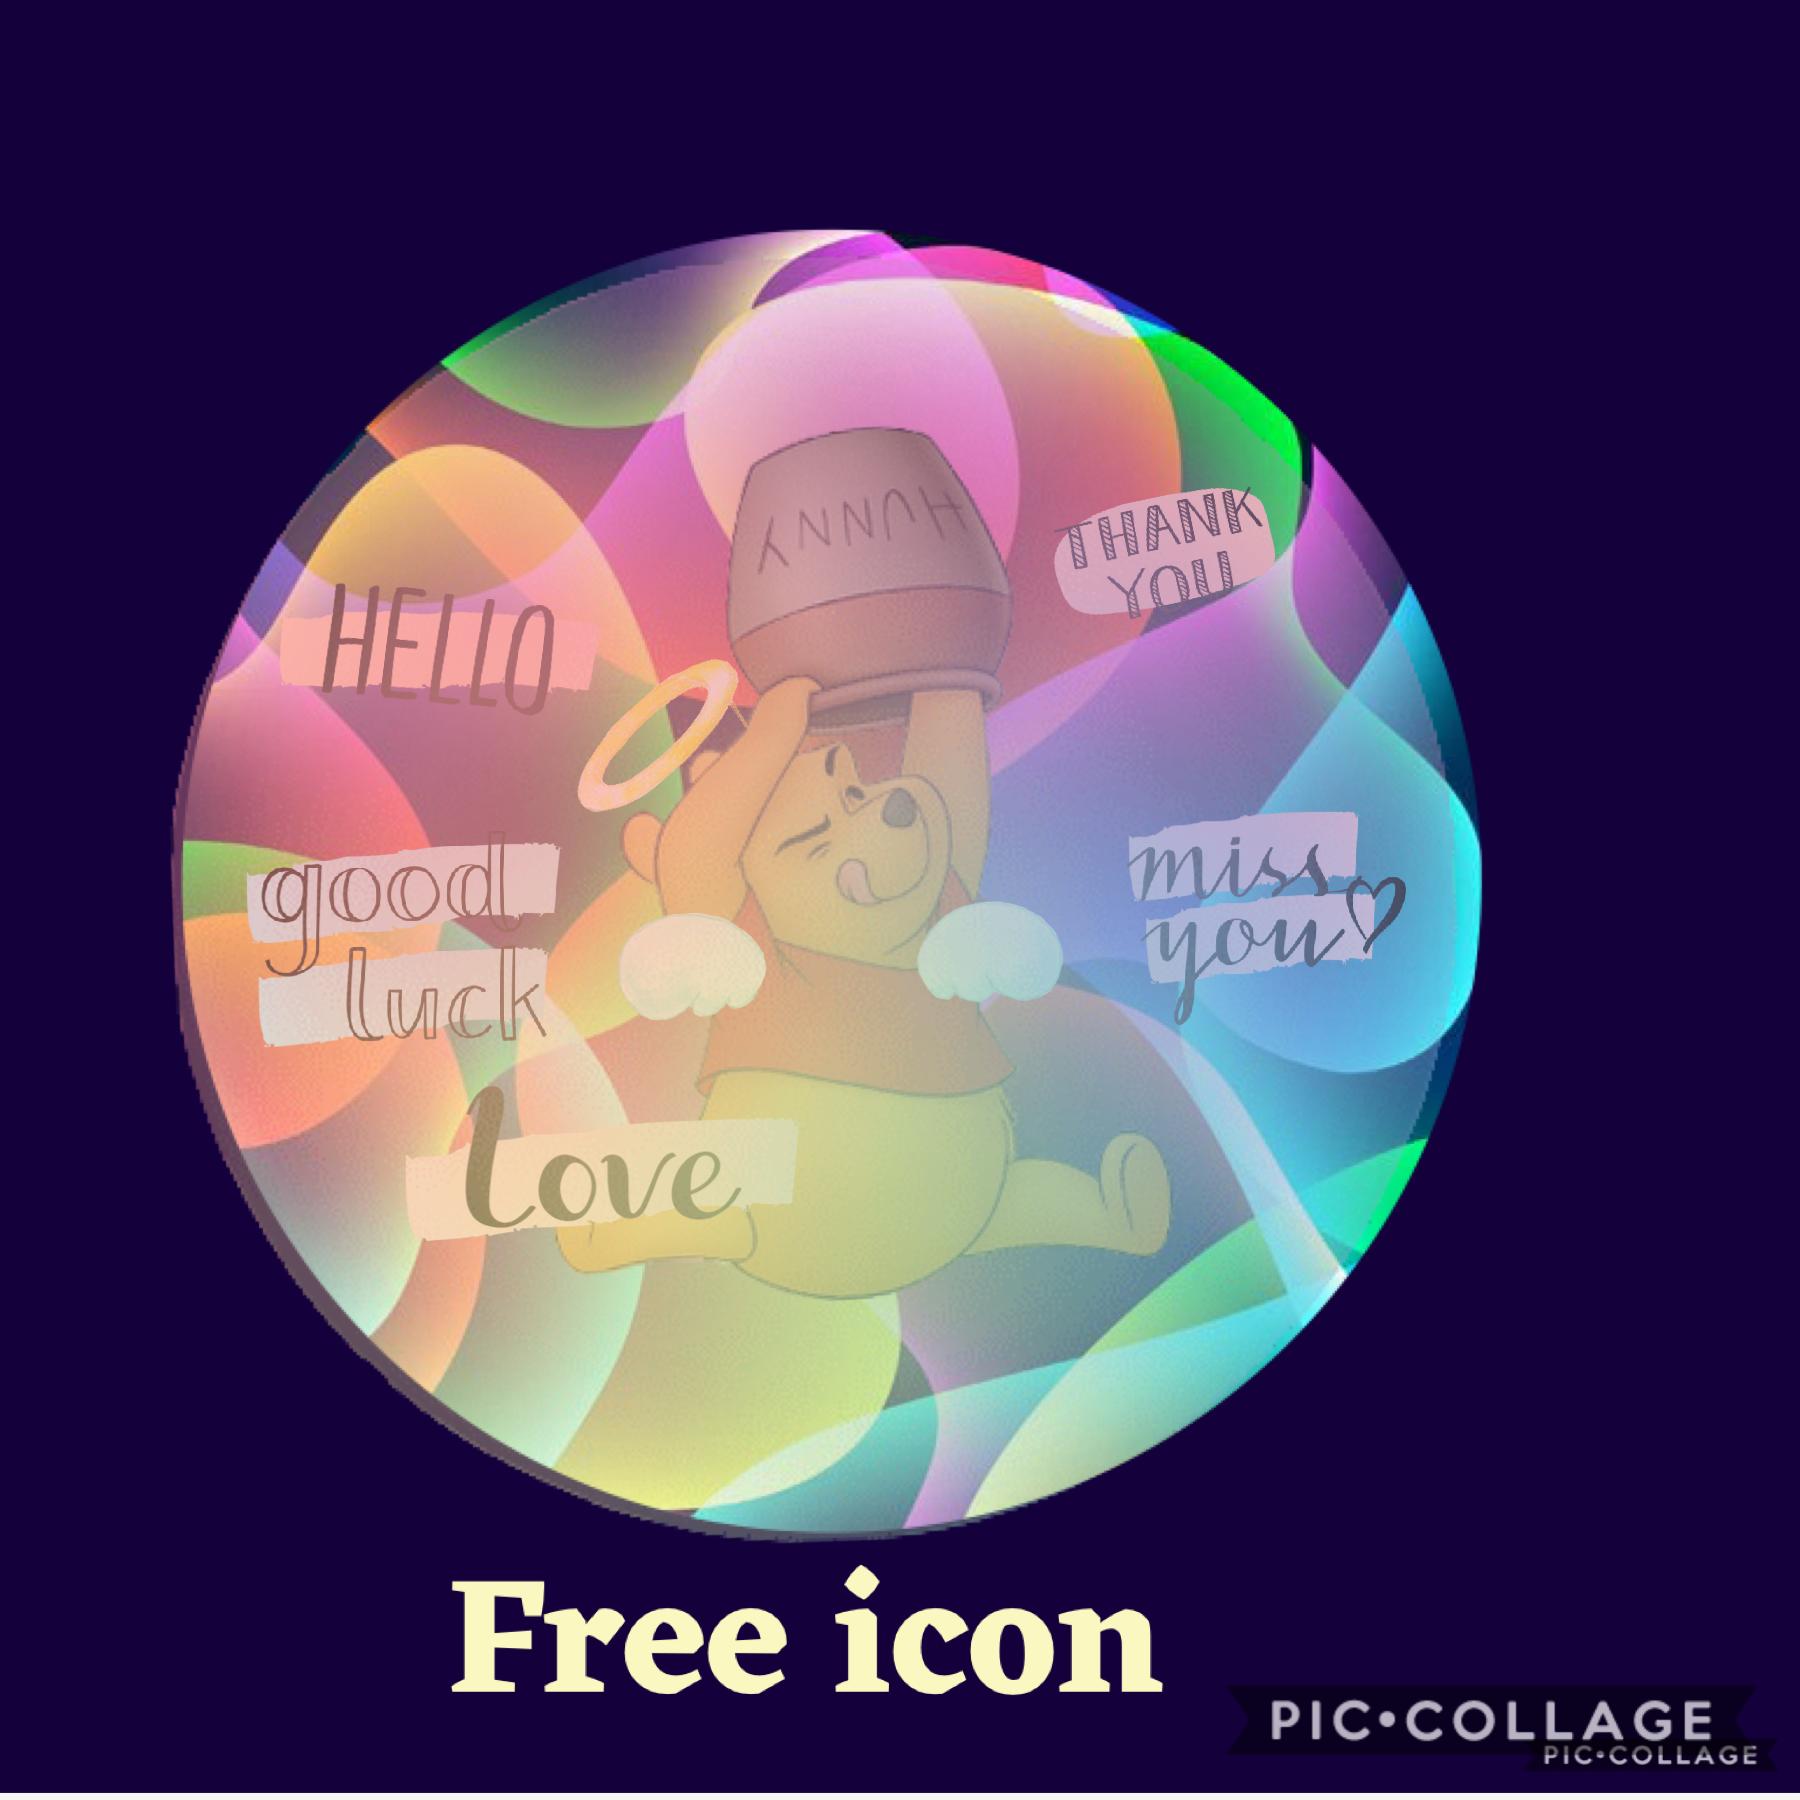 Free icon iejensohskd s